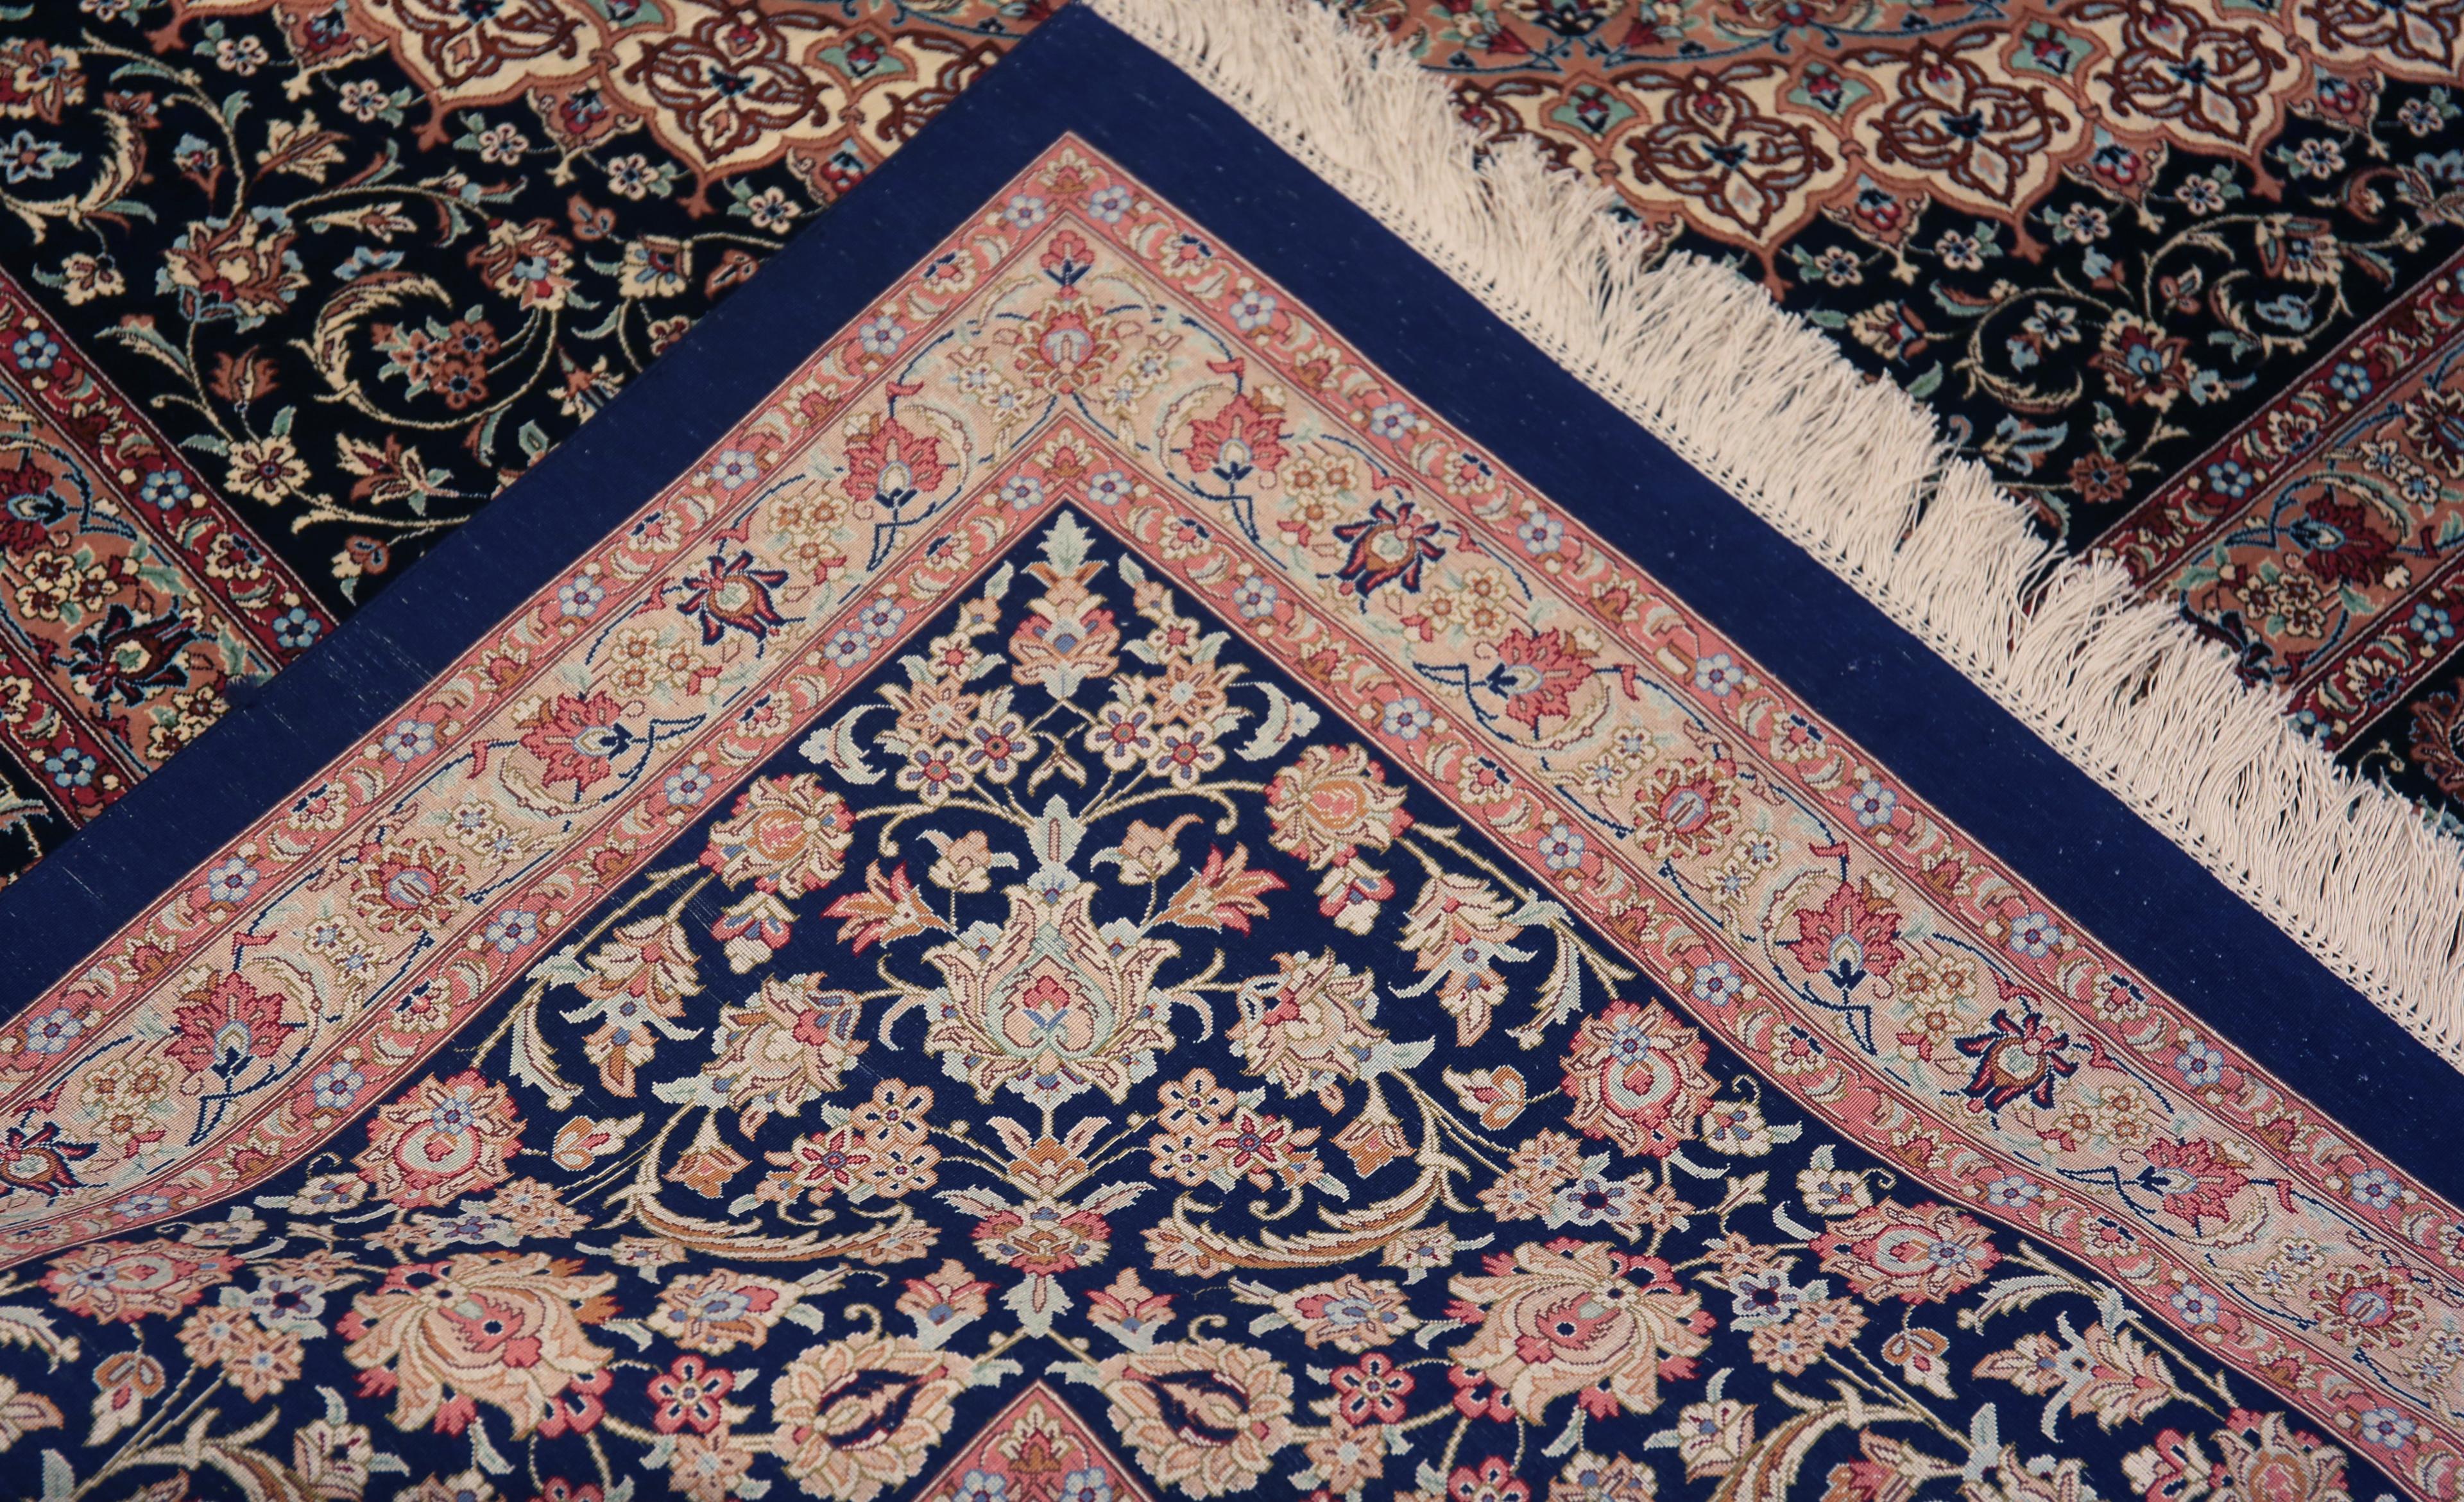 20th Century Luxurious Room Size Silk Vintage Blue Persian Fine Qum Gonbad Rug 9'7